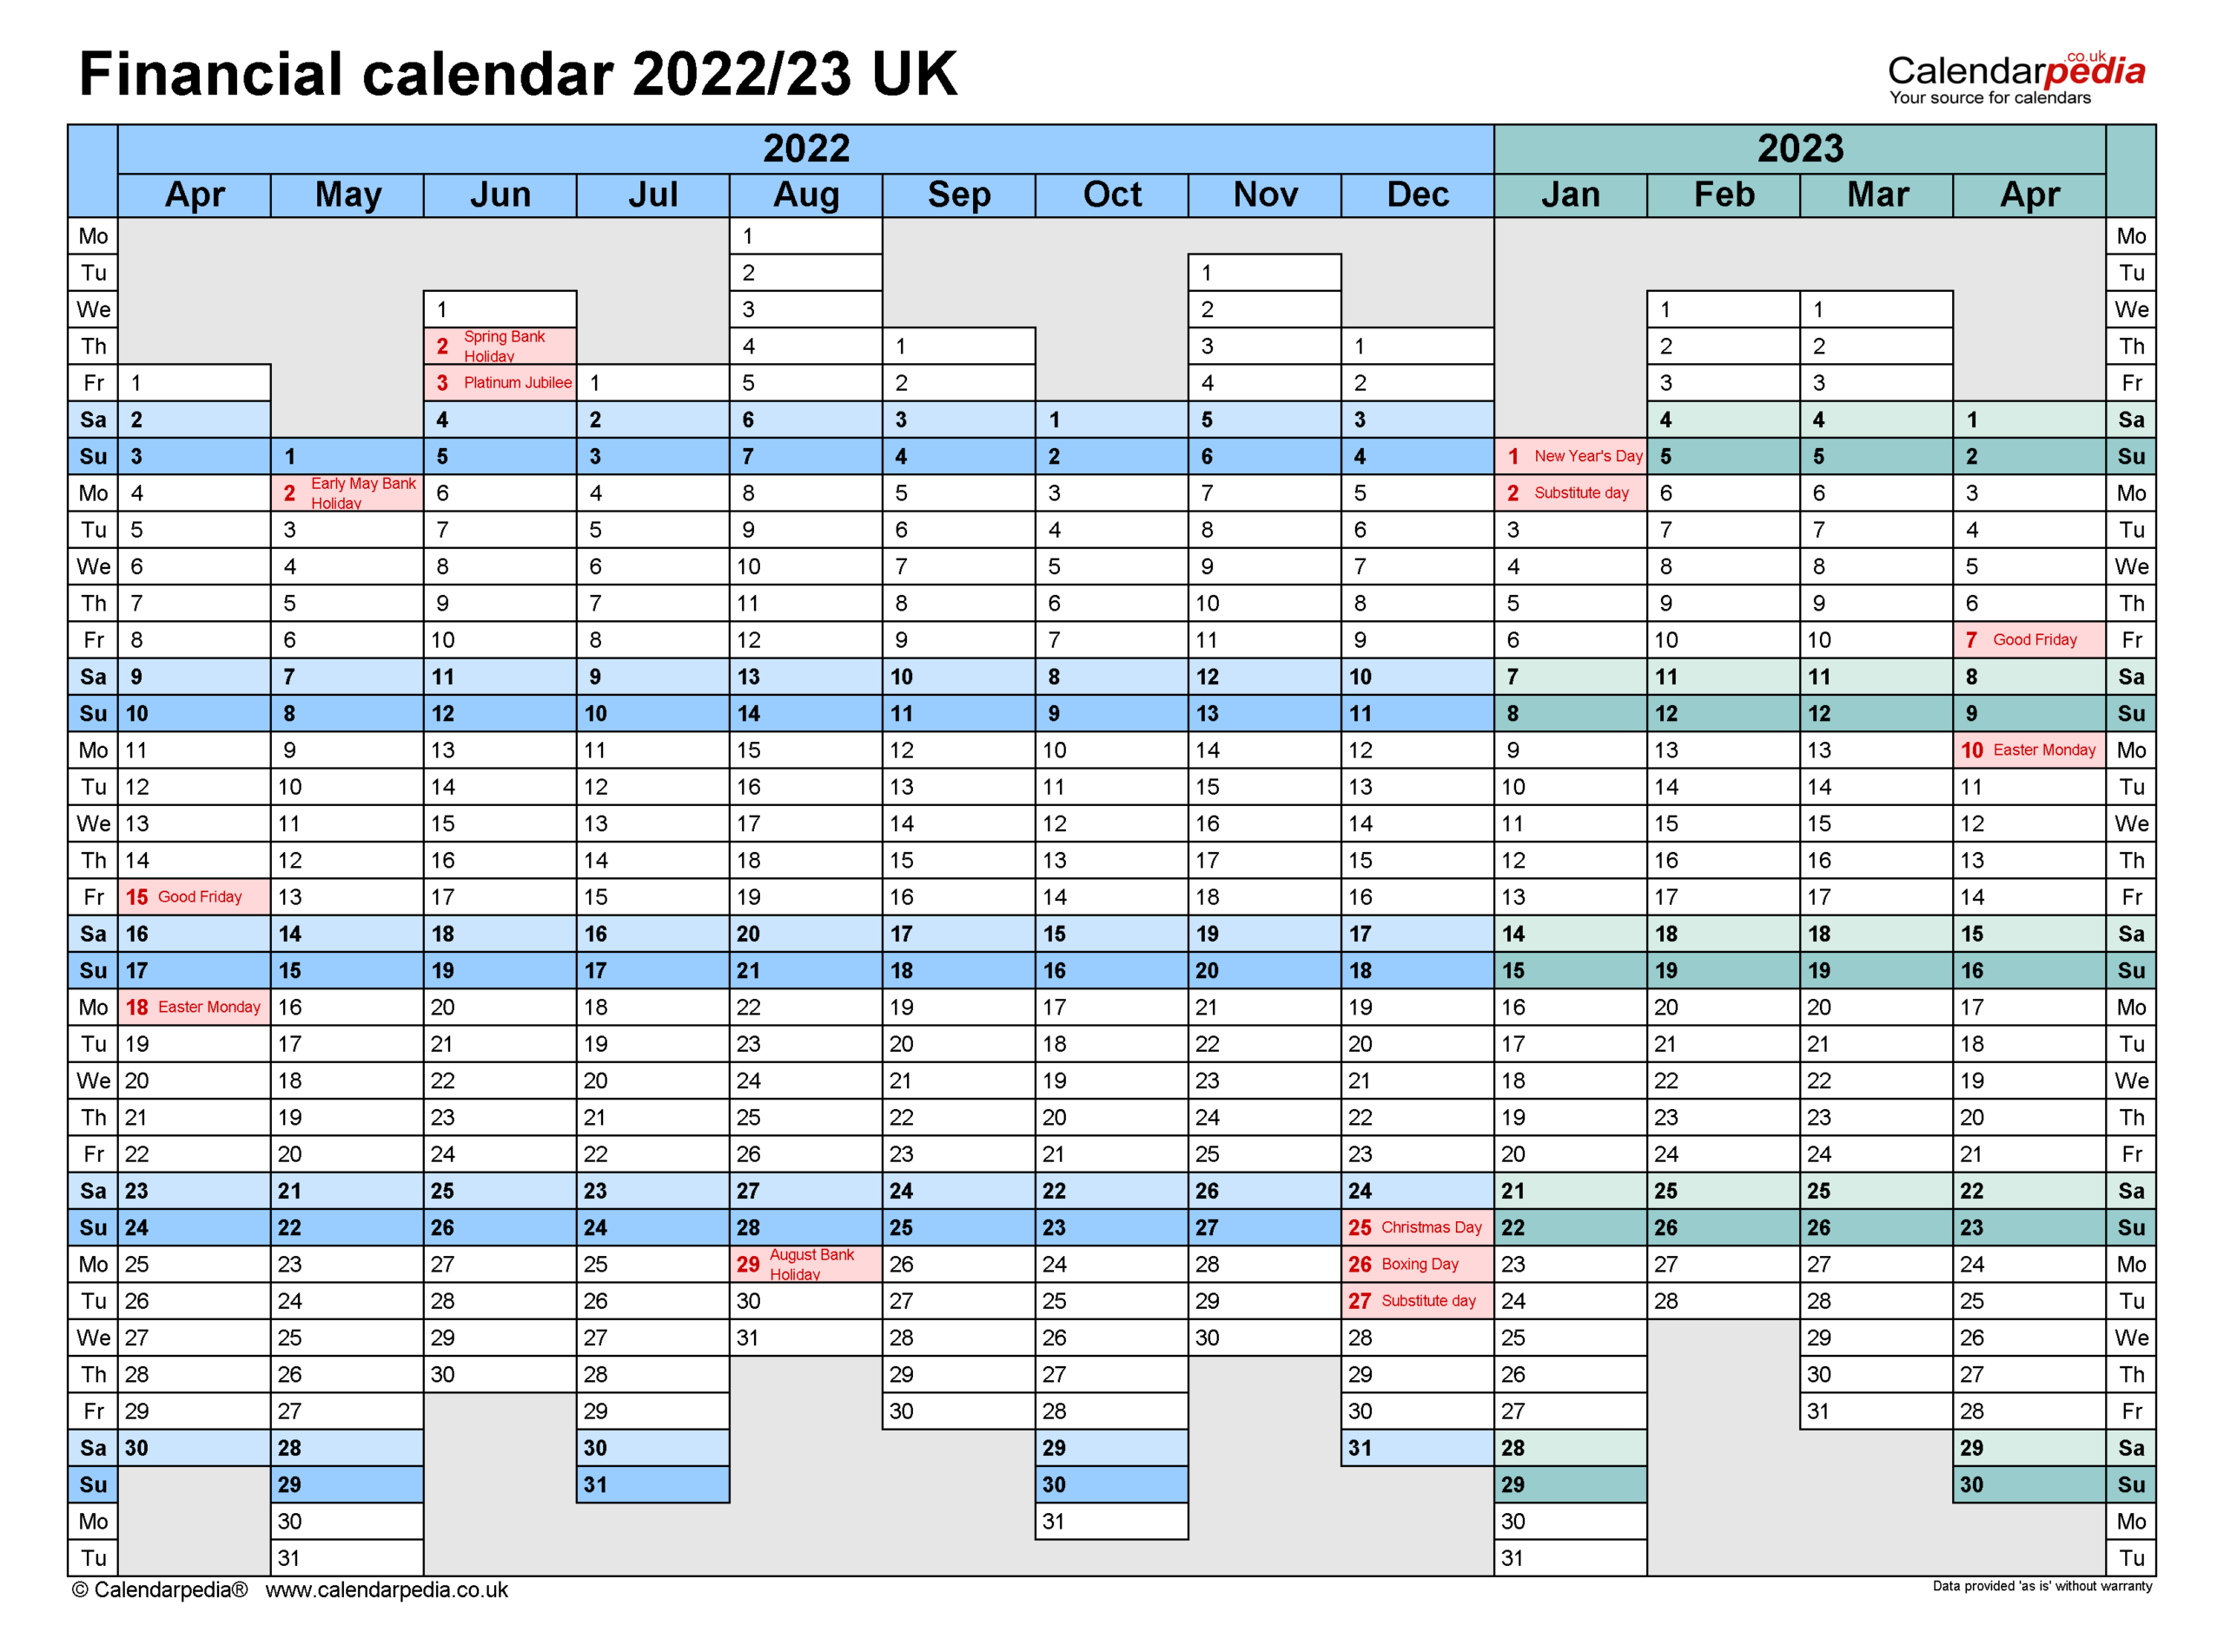 Financial Calendars 2022/23 Uk In Pdf Format-Uk Bank Holiday Calendar 2022